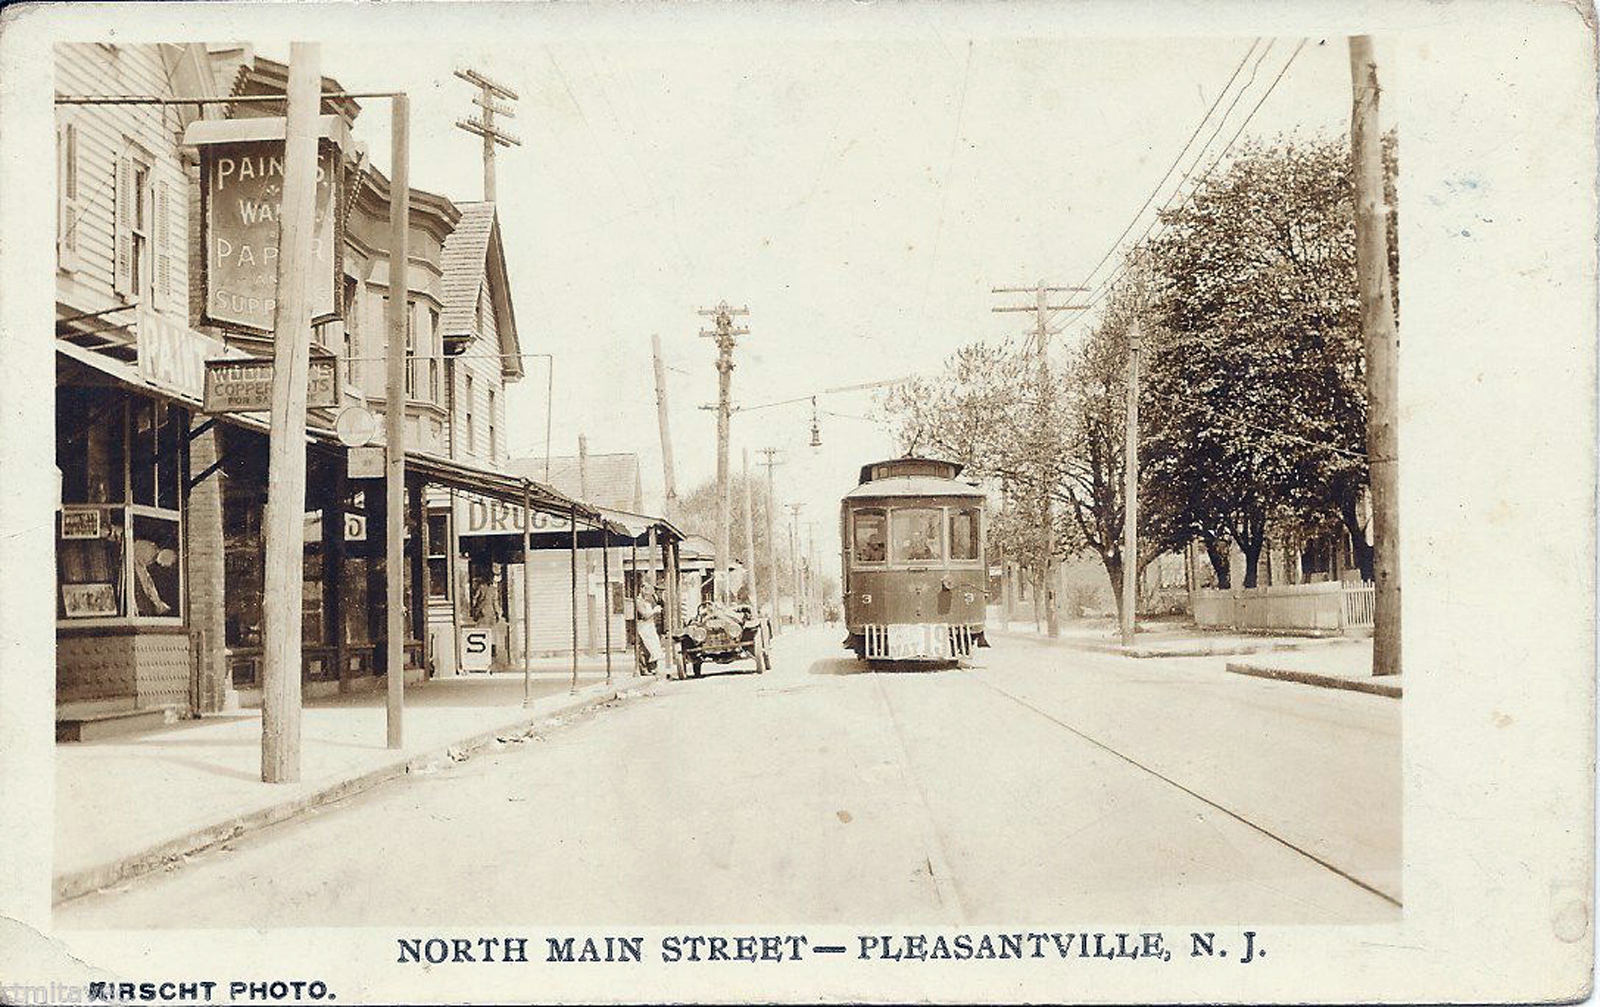 Pleasantville - North Main Street - c 1910 - Kirscht